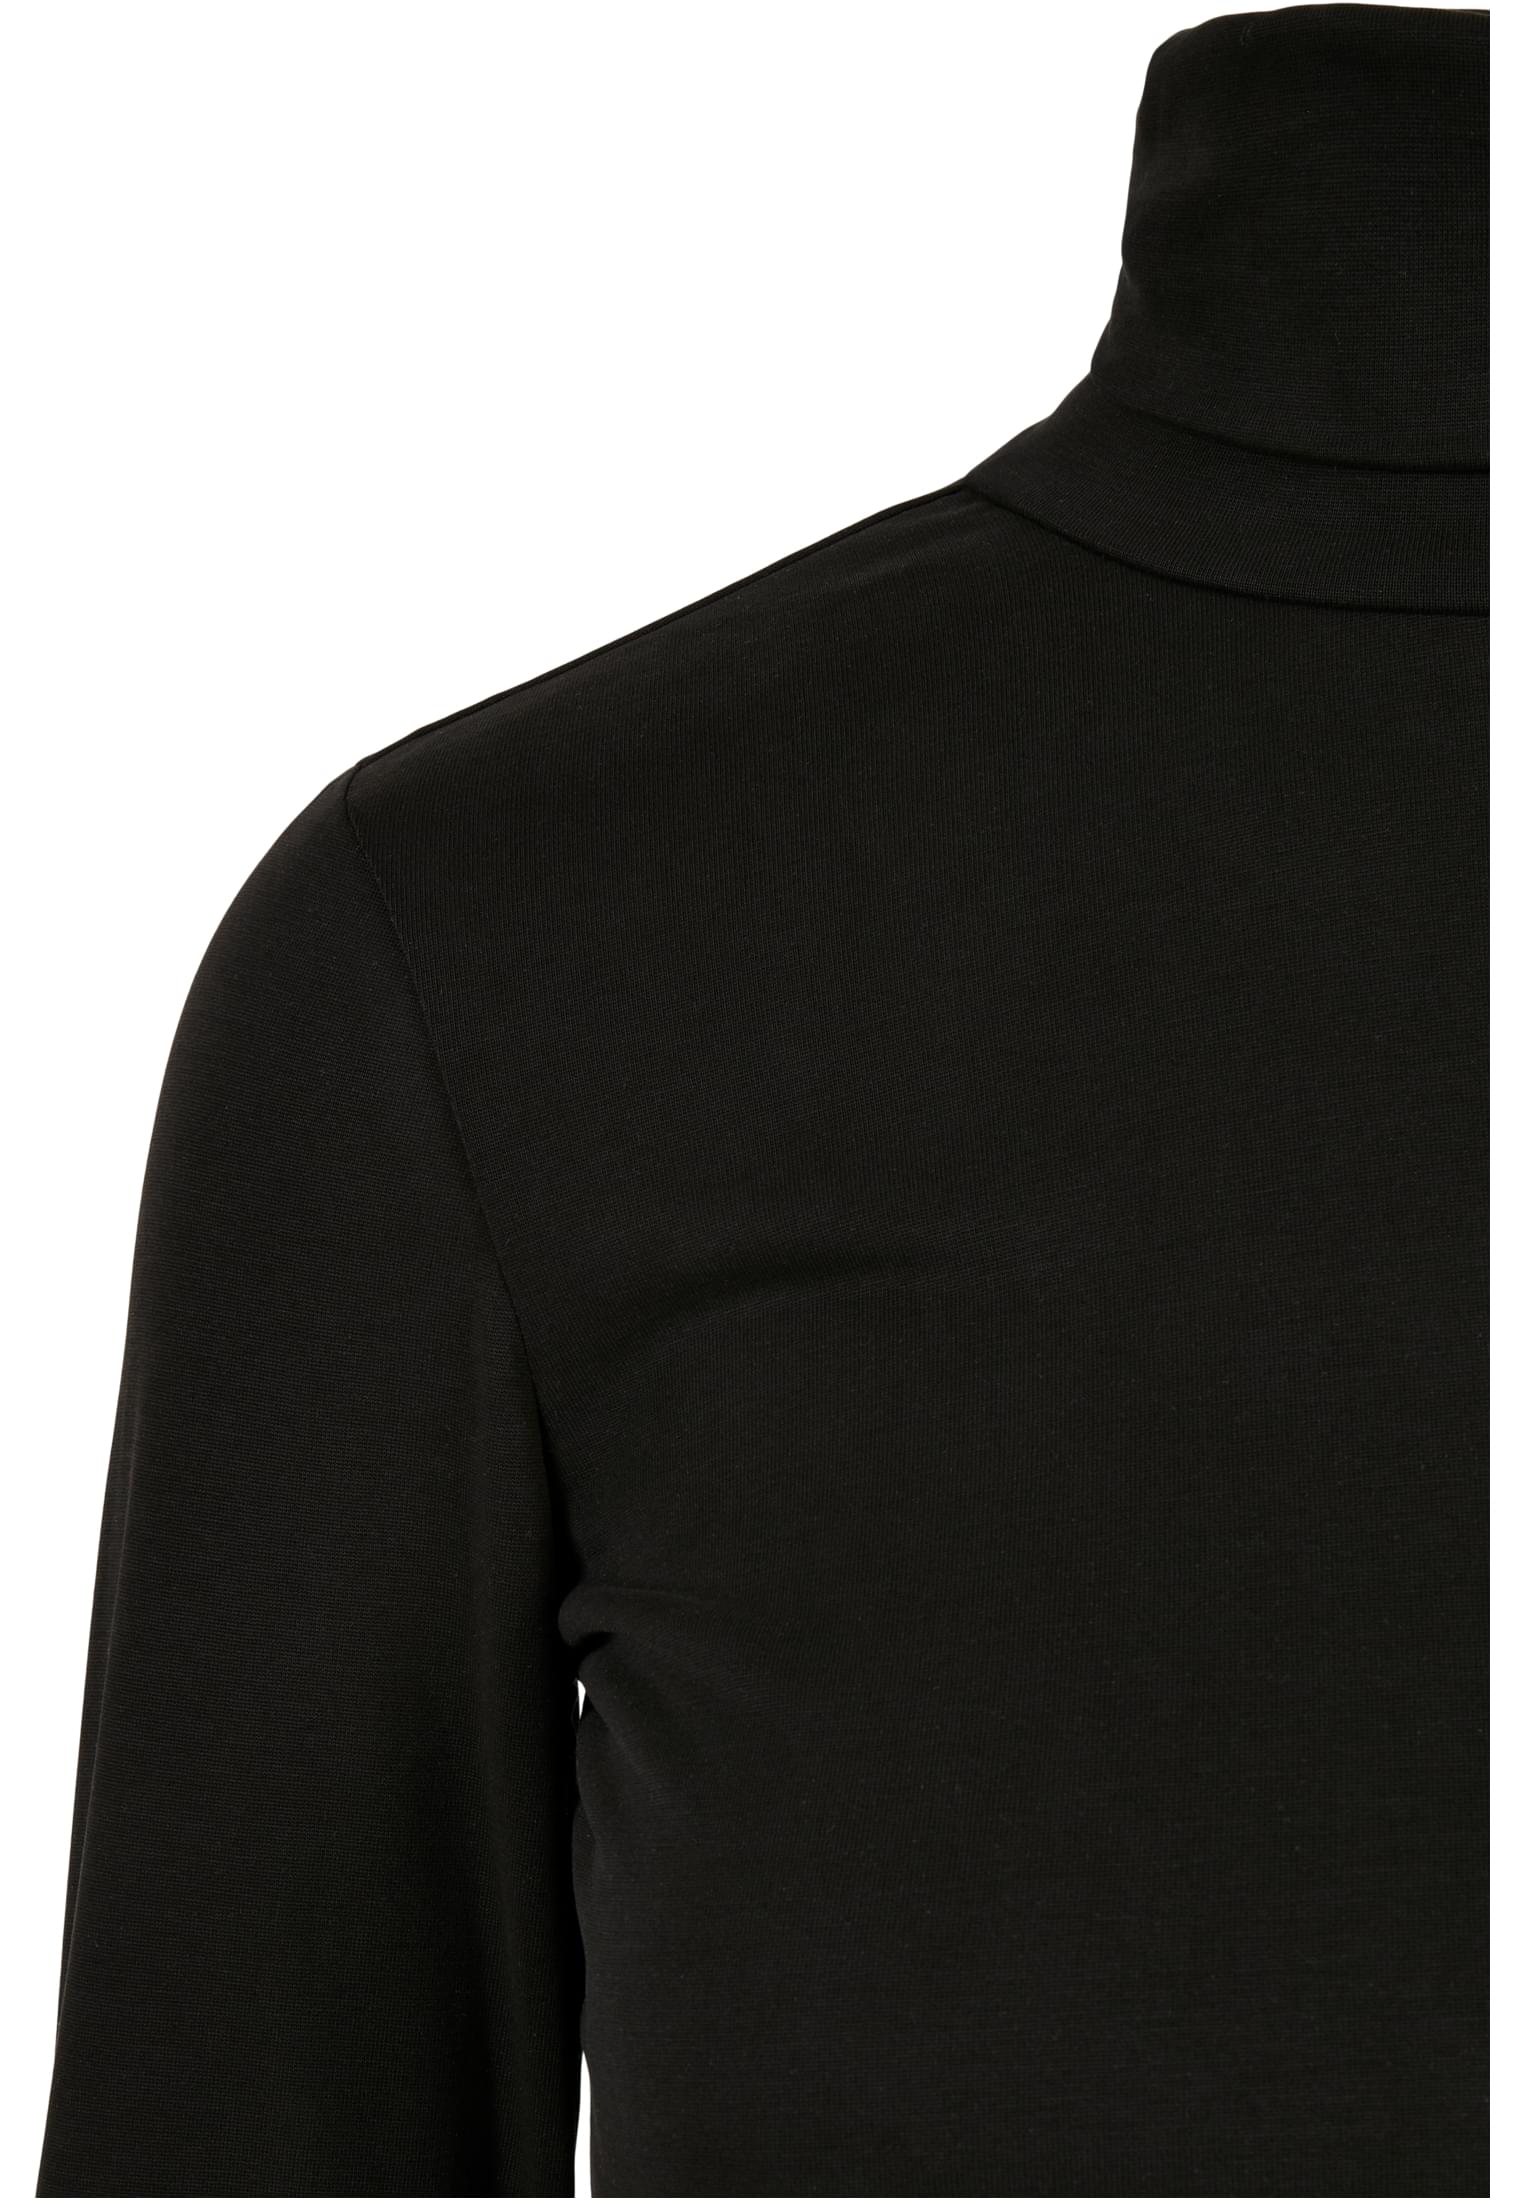 Damen Ladies Modal Turtleneck Longsleeve in Farbe black